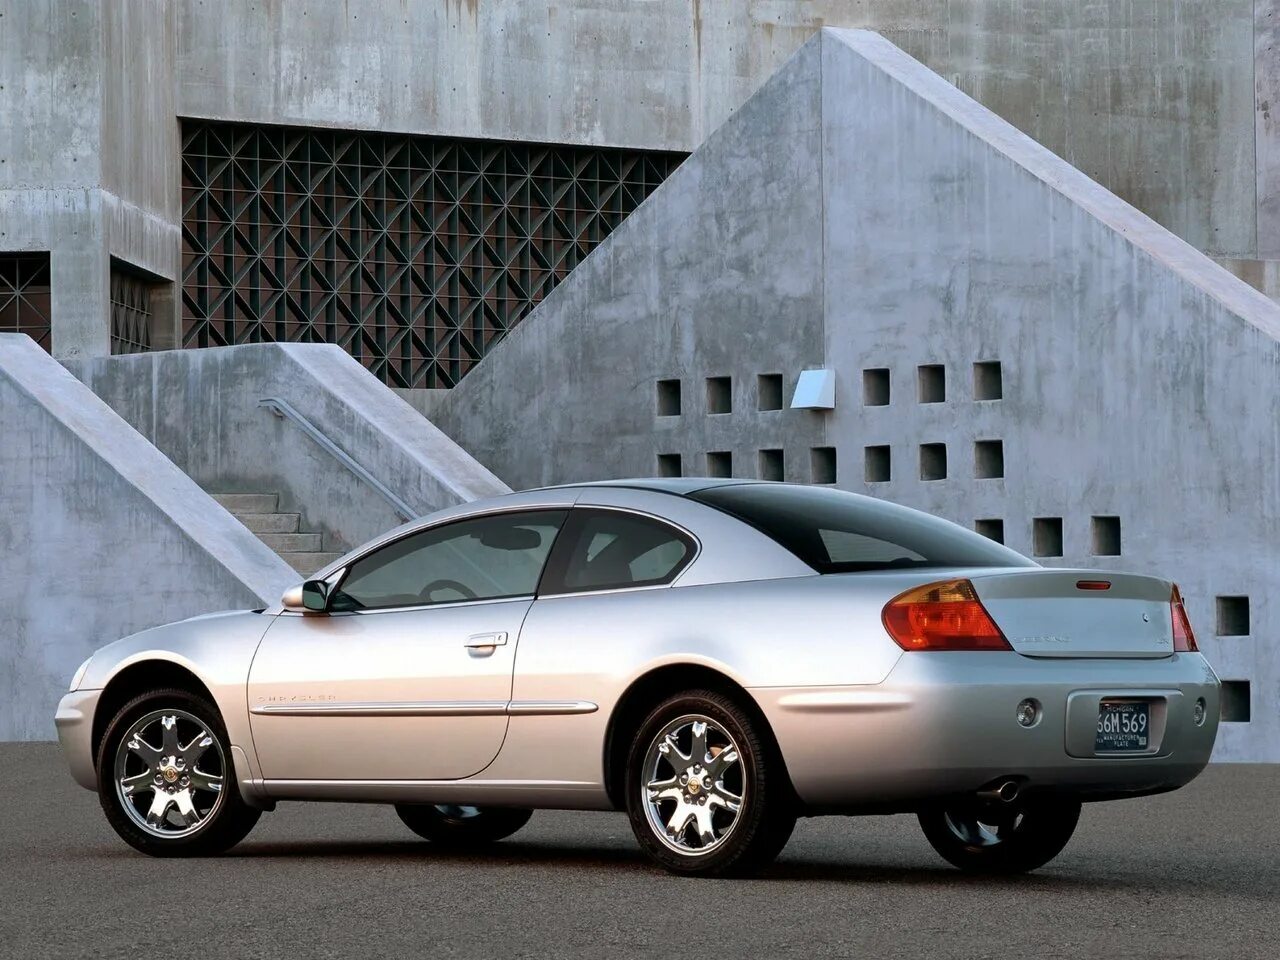 Купе 2000 годов. Chrysler Sebring Coupe 2000. Chrysler Sebring Coupe 2003. Chrysler Sebring Coupe 2001. Chrysler Sebring II 2000 – 2003 купе.